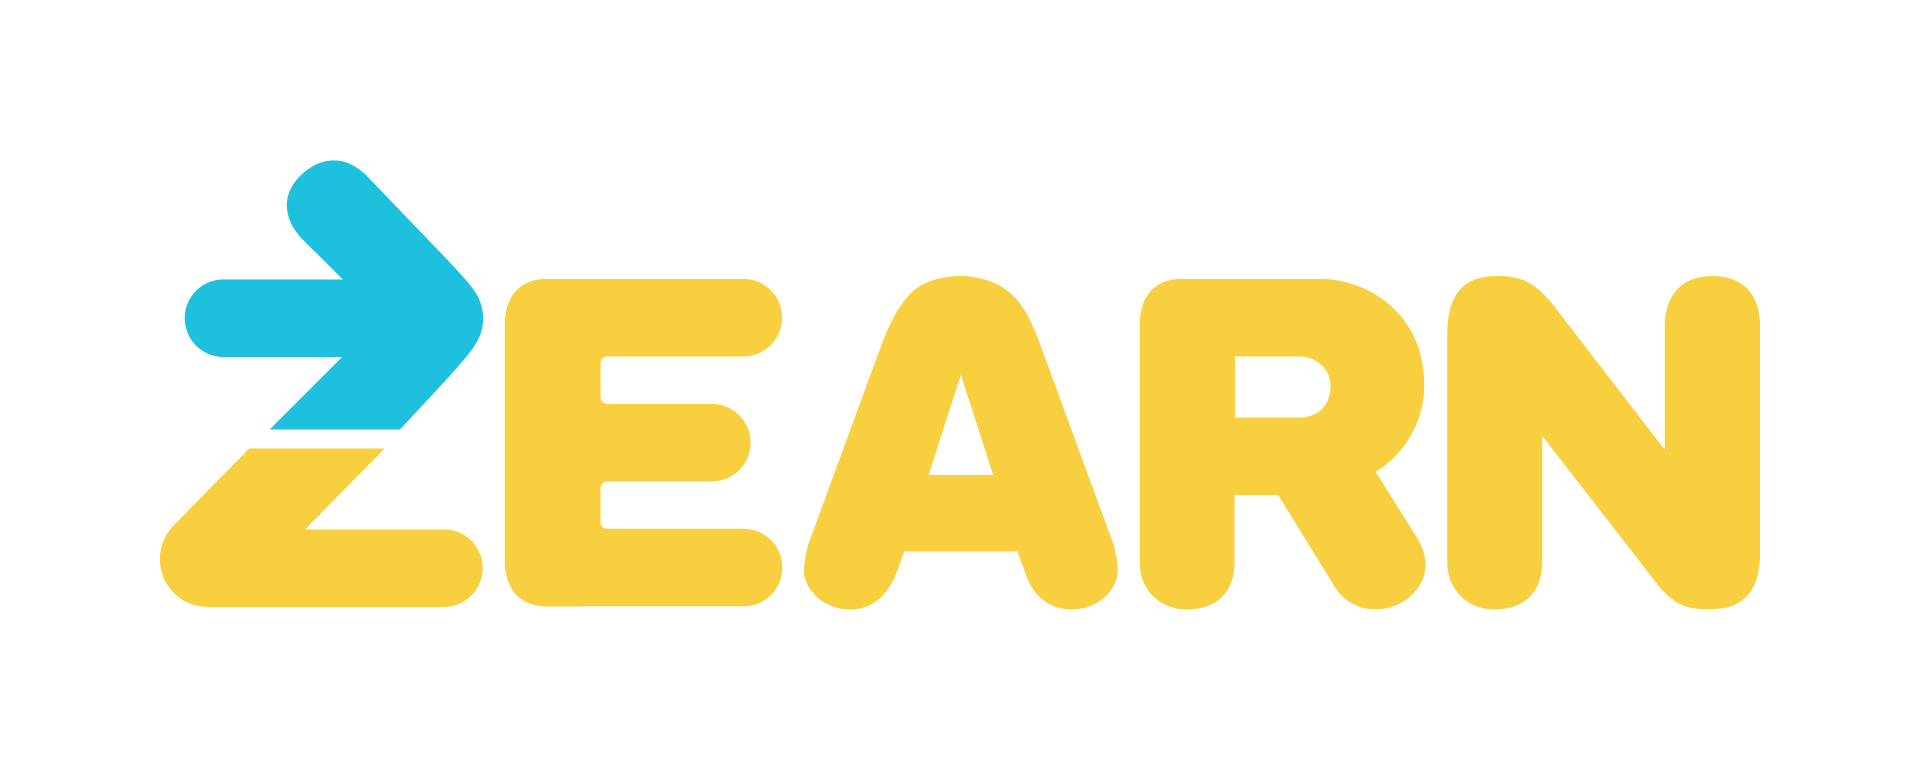 Zearn Logo